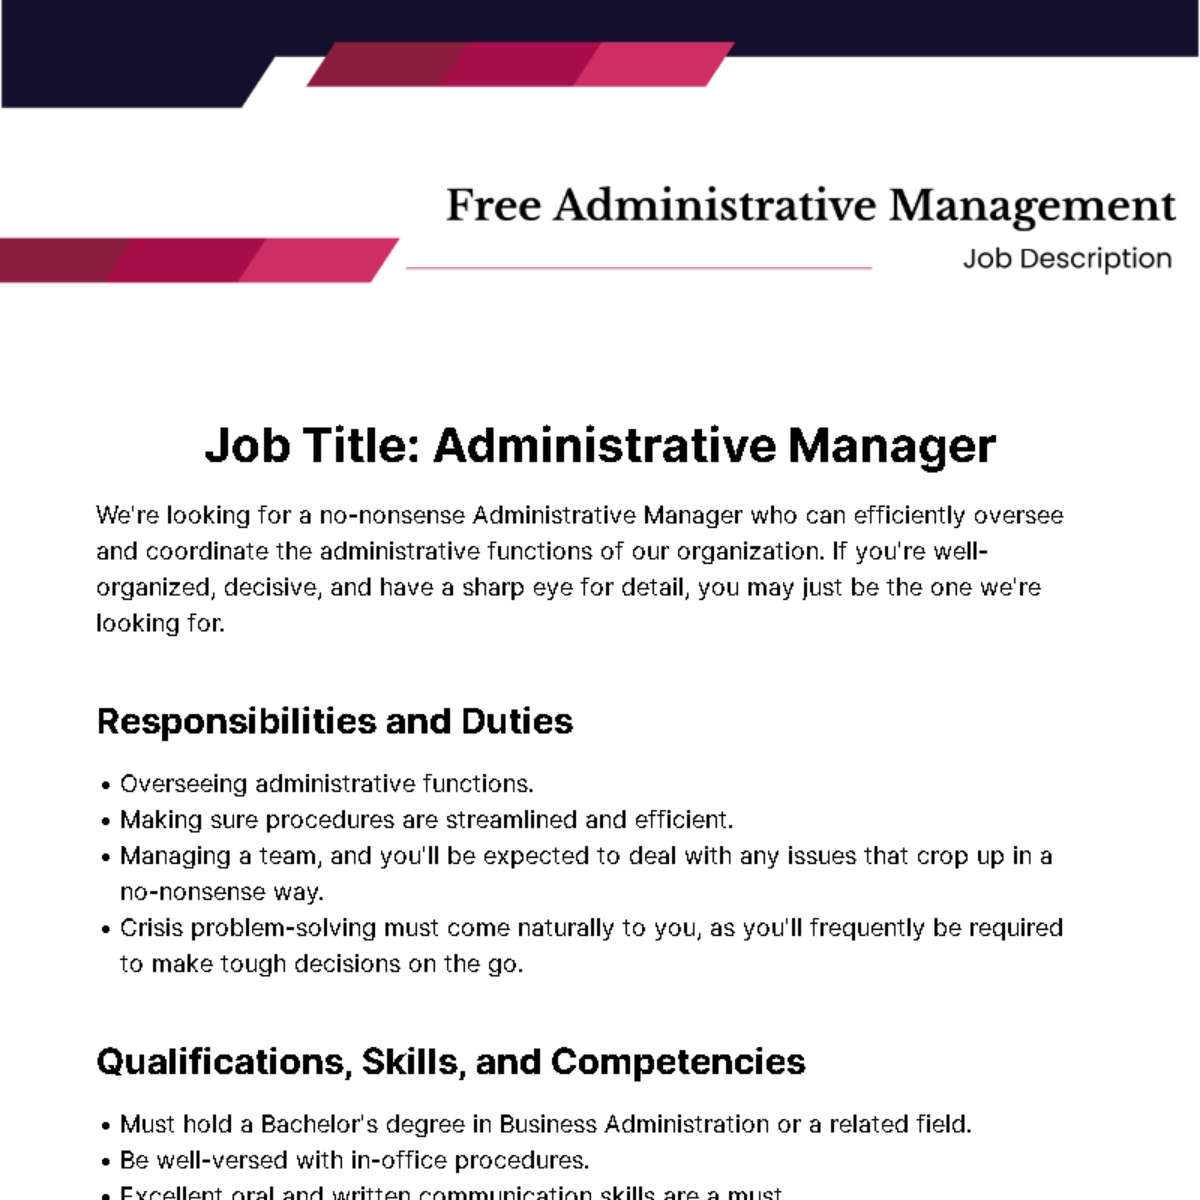 Free Administrative Management Job Description Template